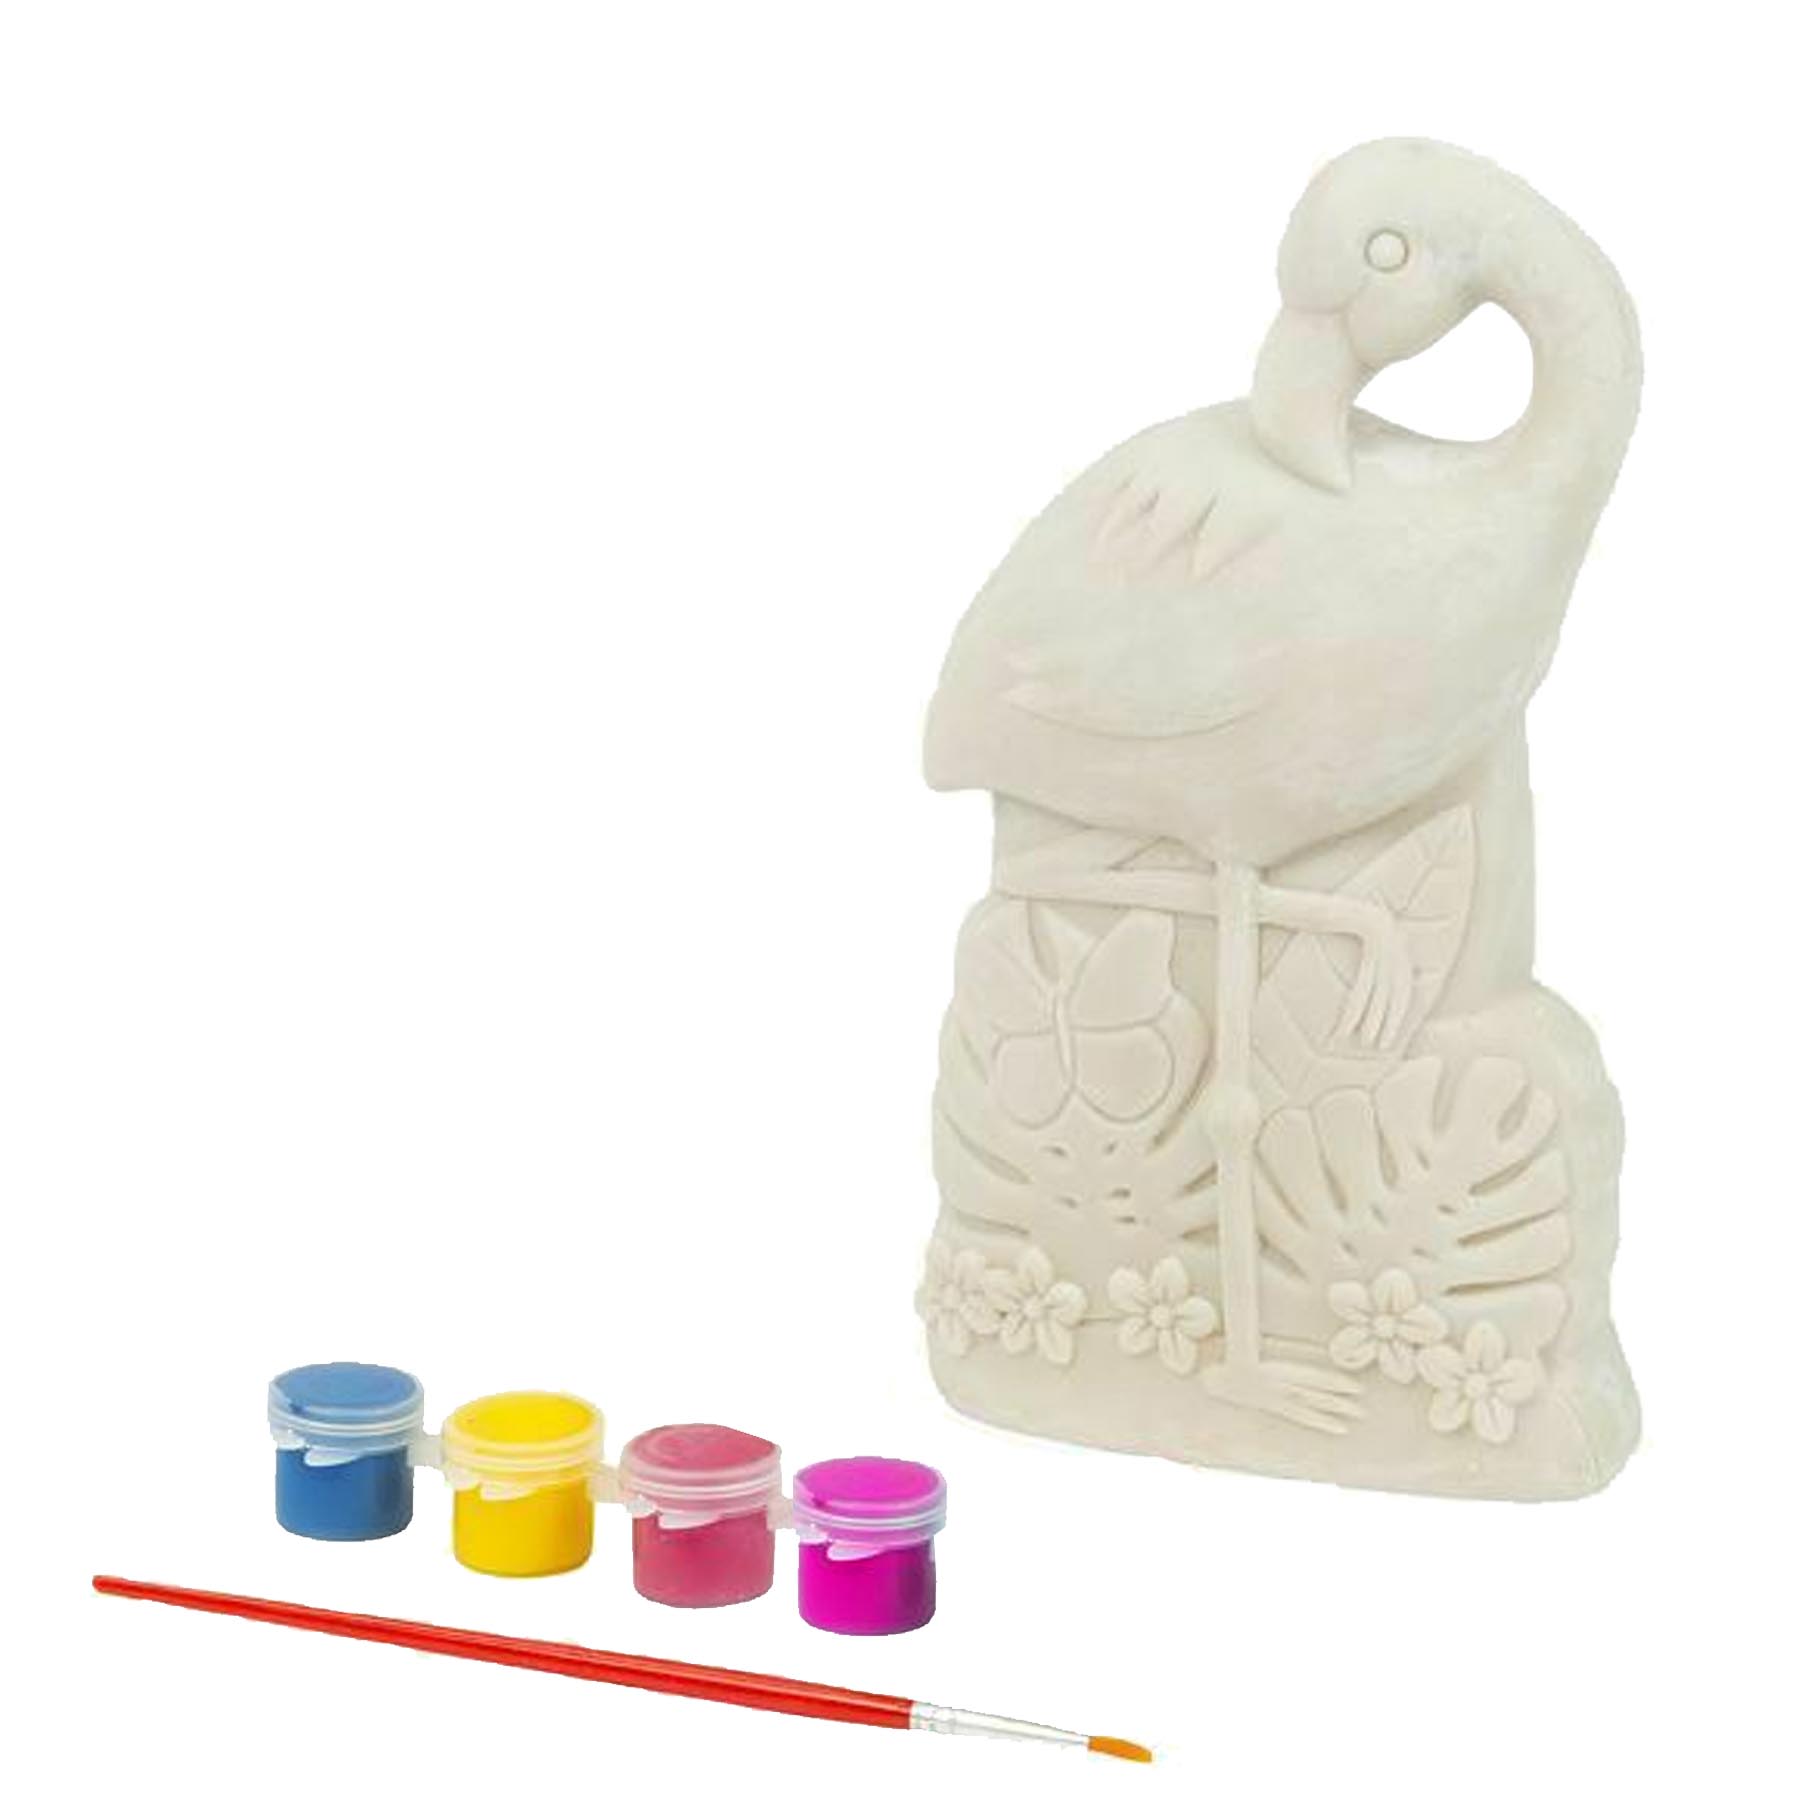 Paint Your Own Garden Flamingo Statue Magical Art Craft Kit Creative Activity Set